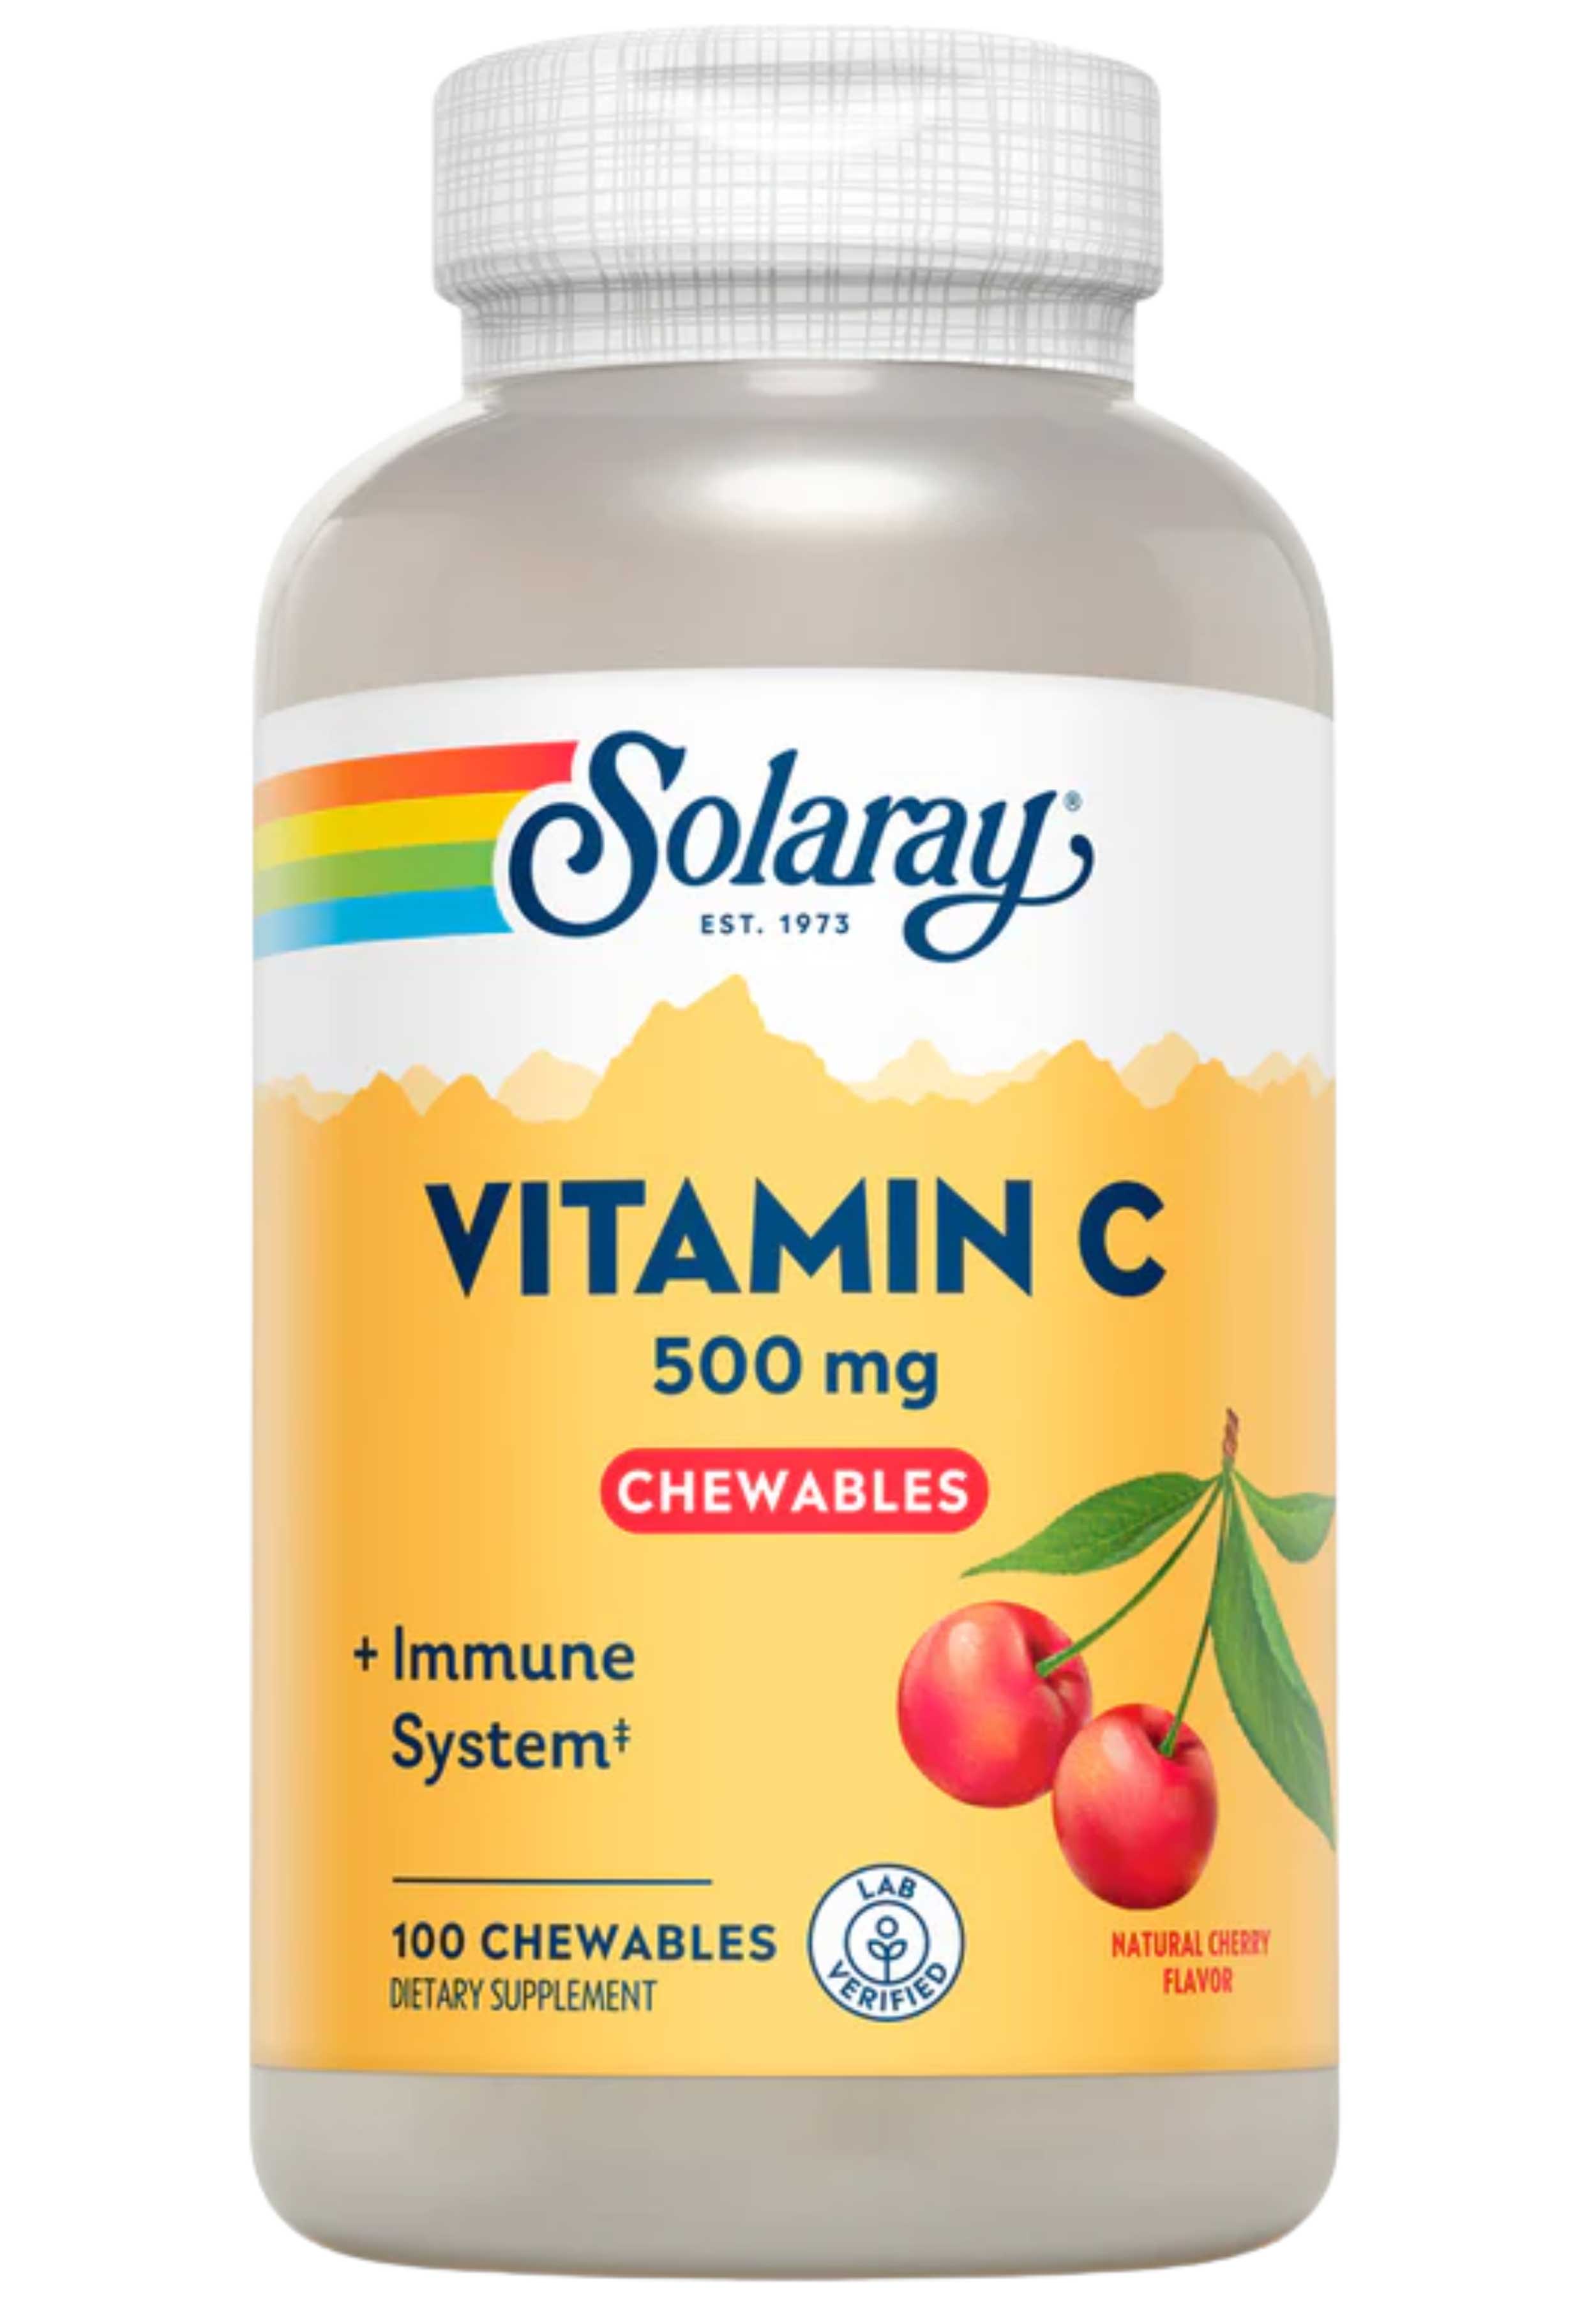 Solaray Vitamin C 500 mg Chewables